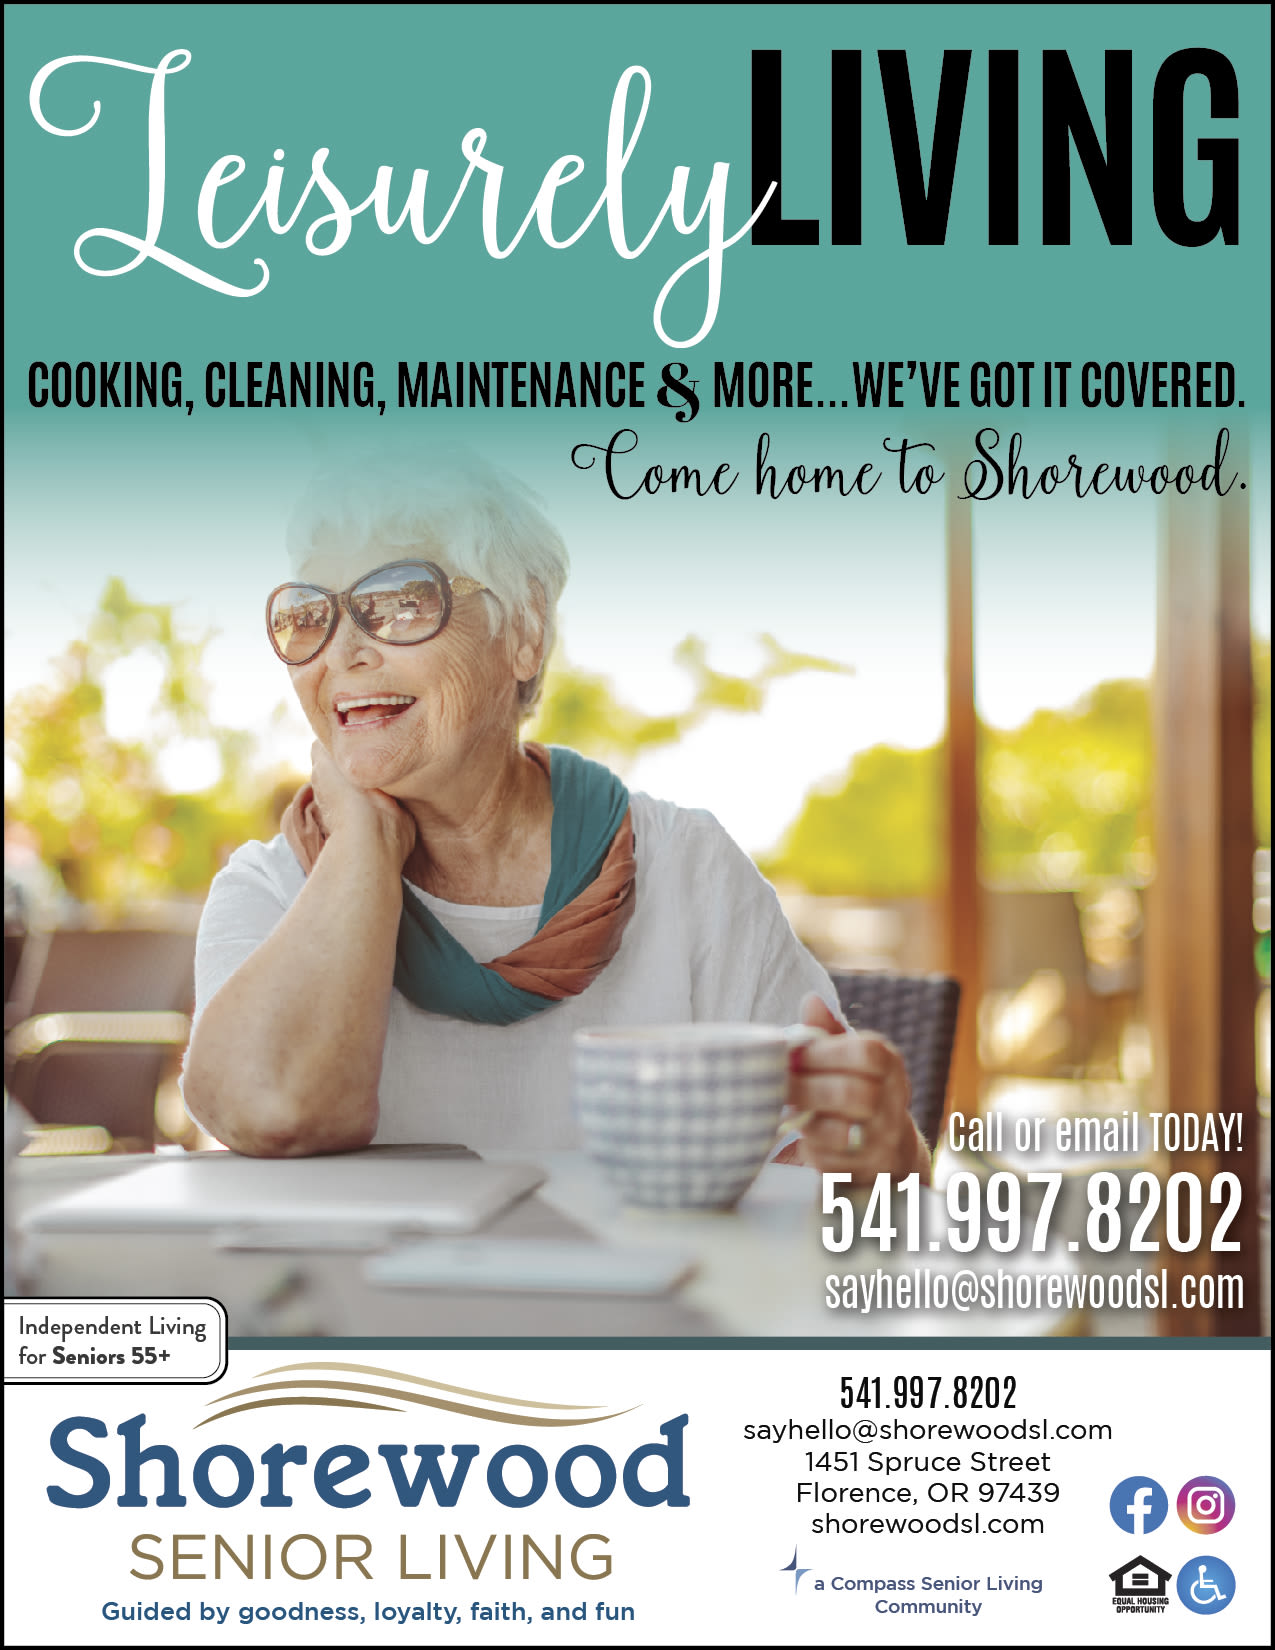 Leisurely Living Flyers at Shorewood Senior Living